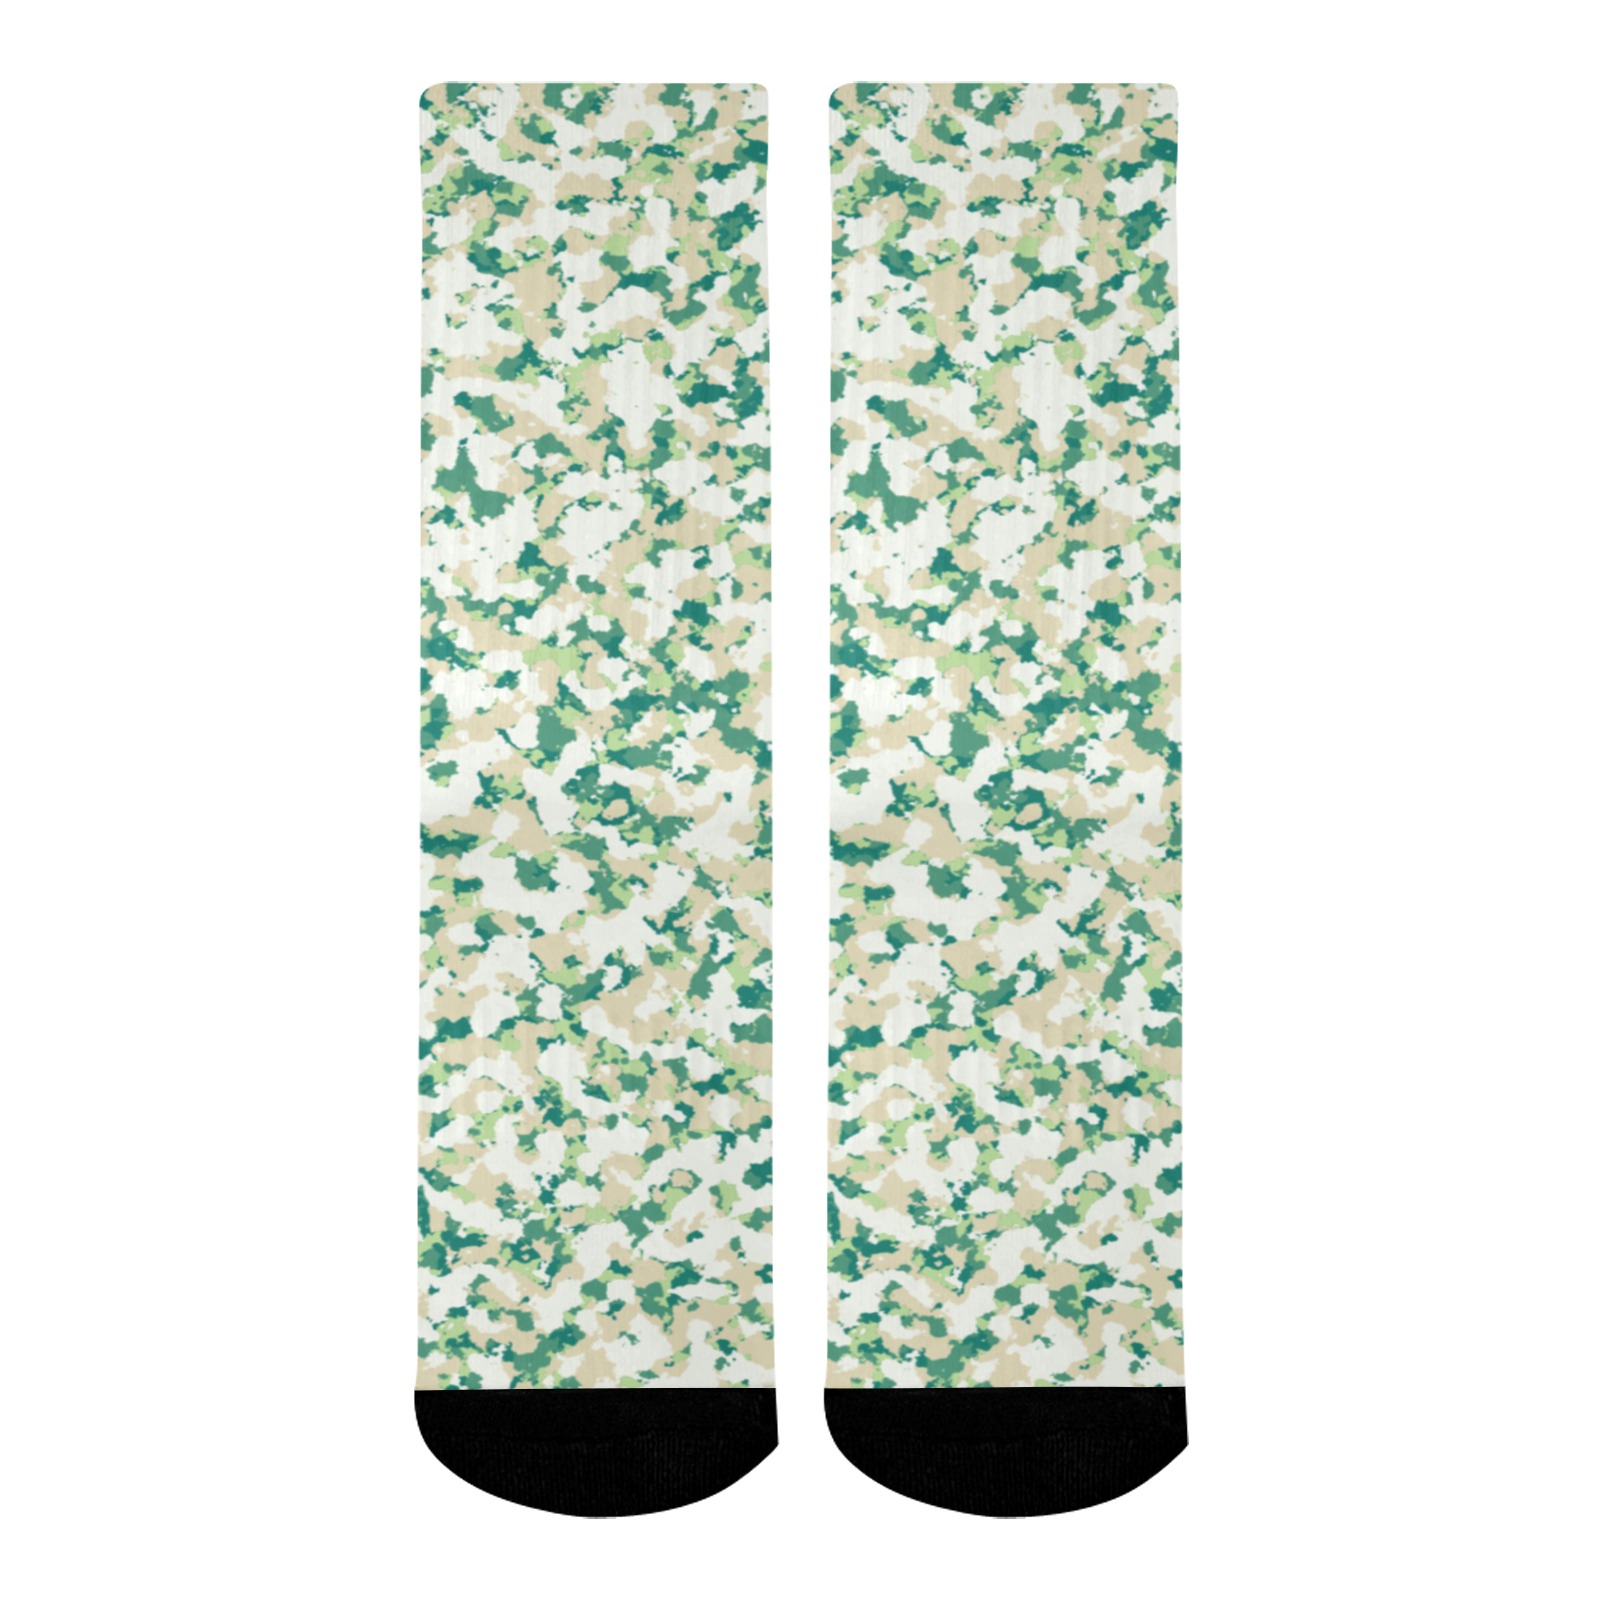 Wednesday Green(11) Mid-Calf Socks (Black Sole)